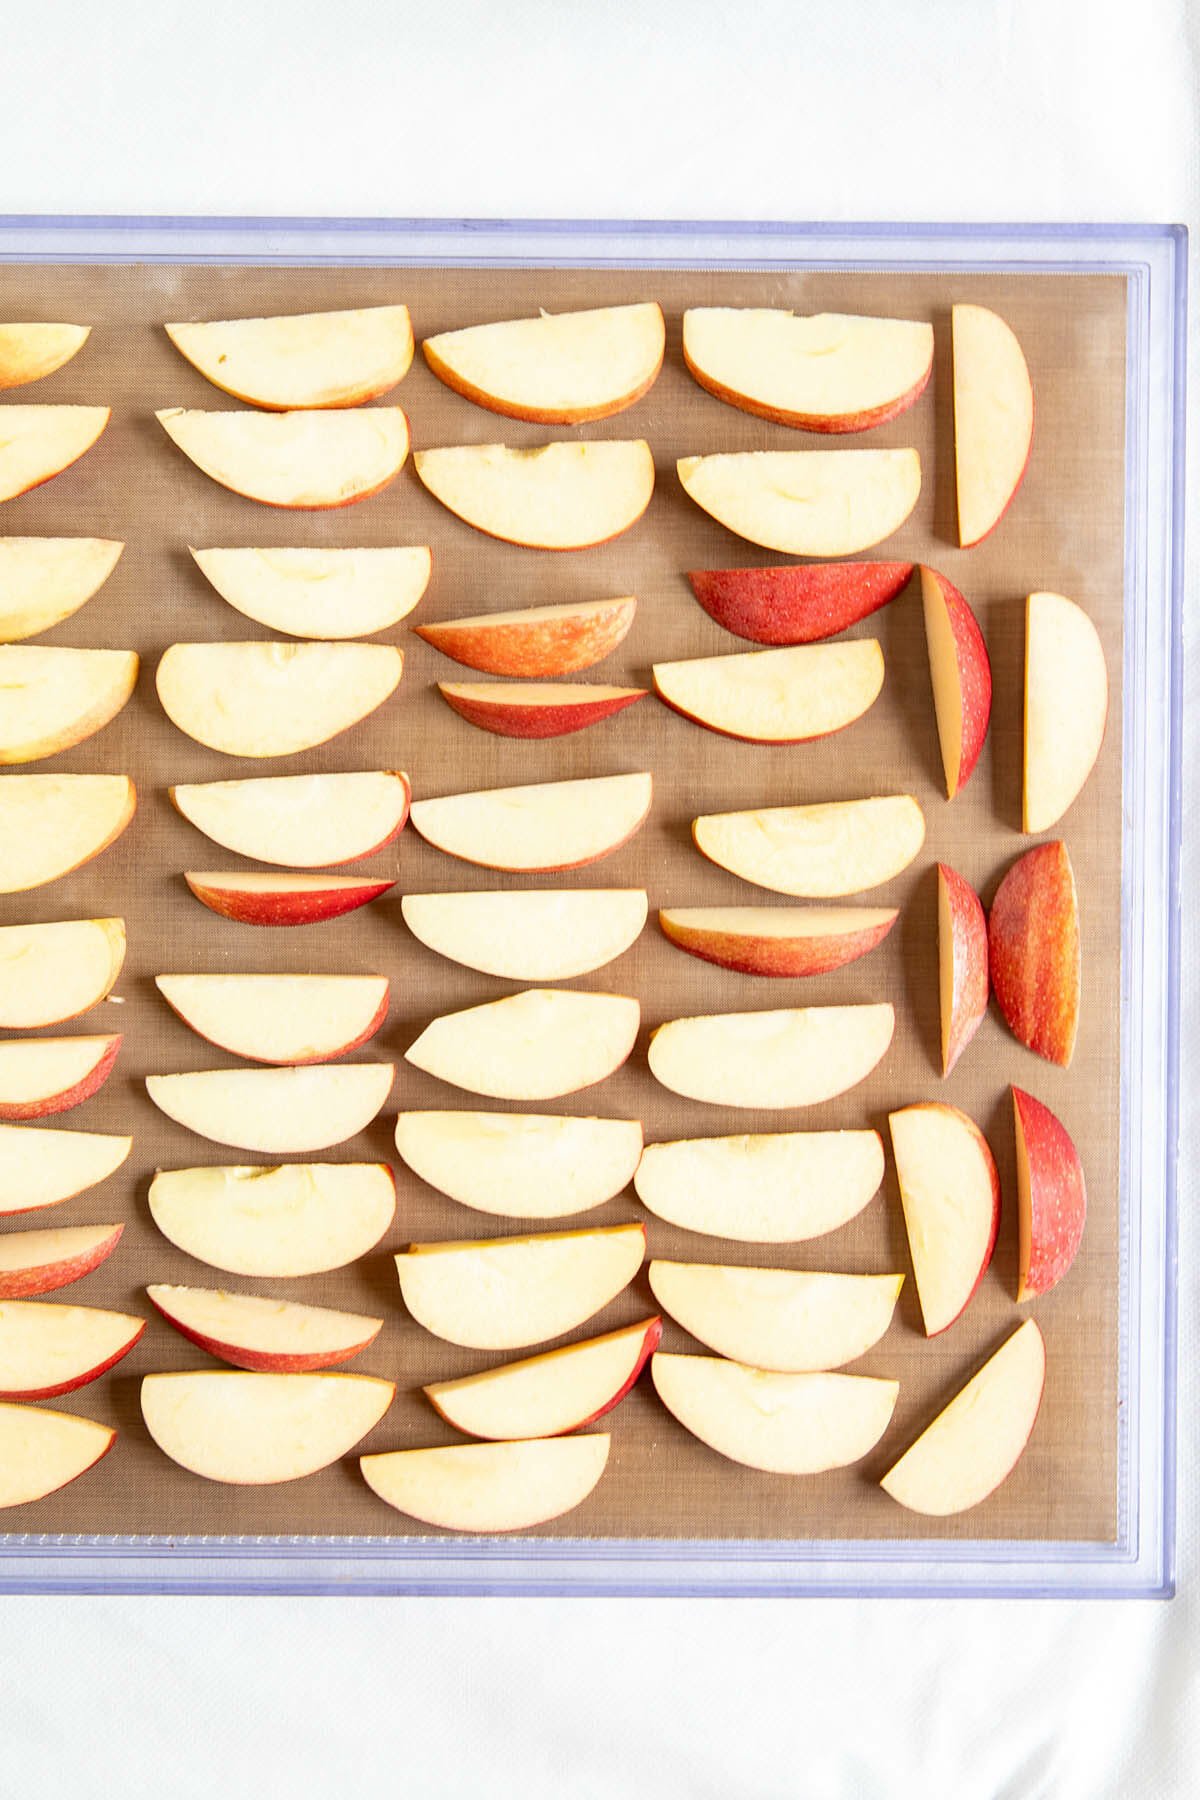 Apple slices on a Teflon lined dehydrator sheet.